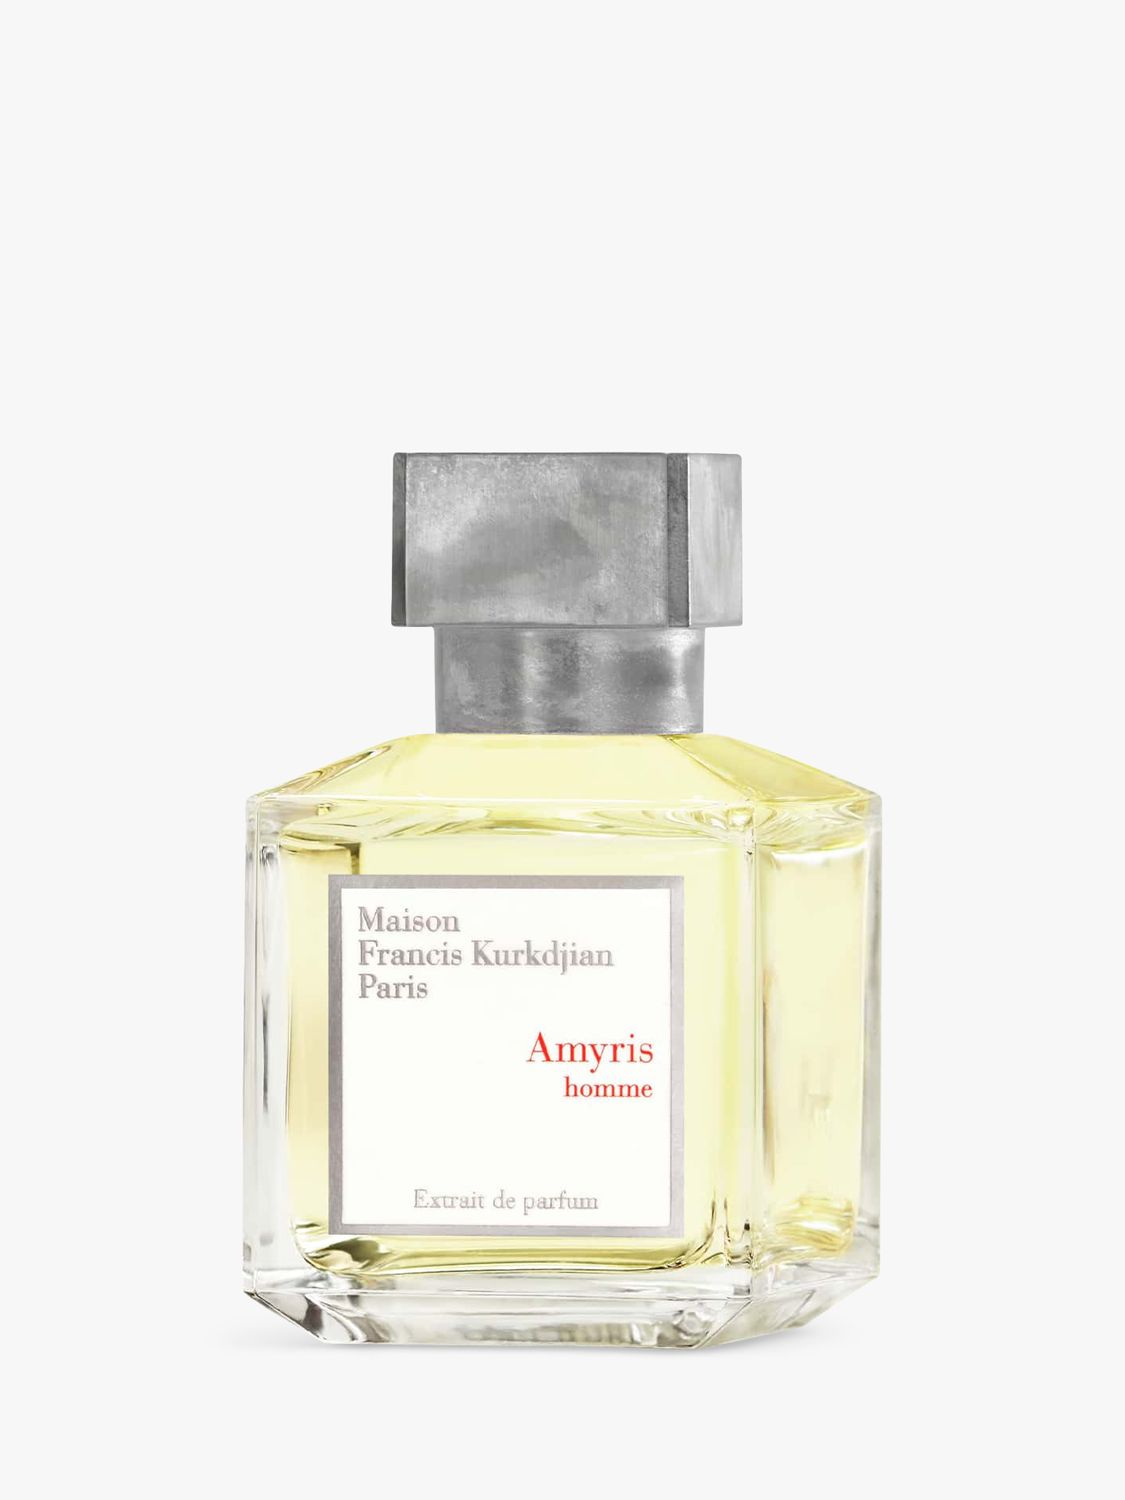 Maison Francis Kurkdjian Amyris Homme Extrait de Parfum, 70ml at John